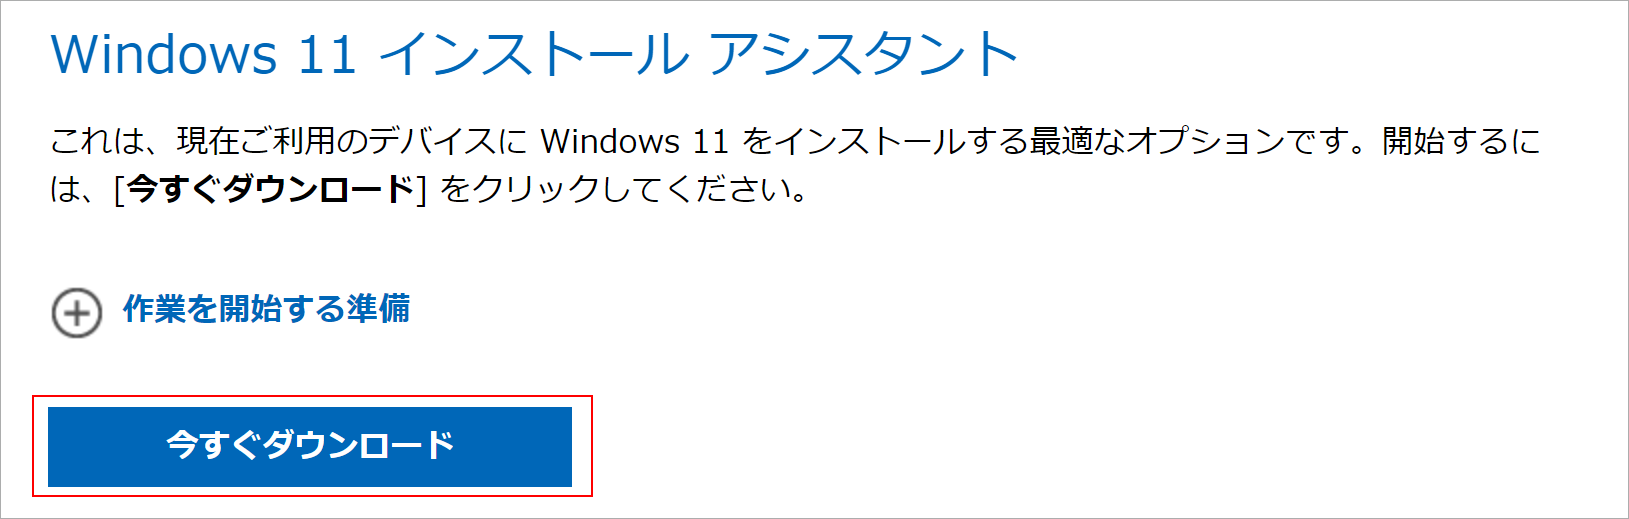 Windows 11メディア作成ツールをダウンロードする